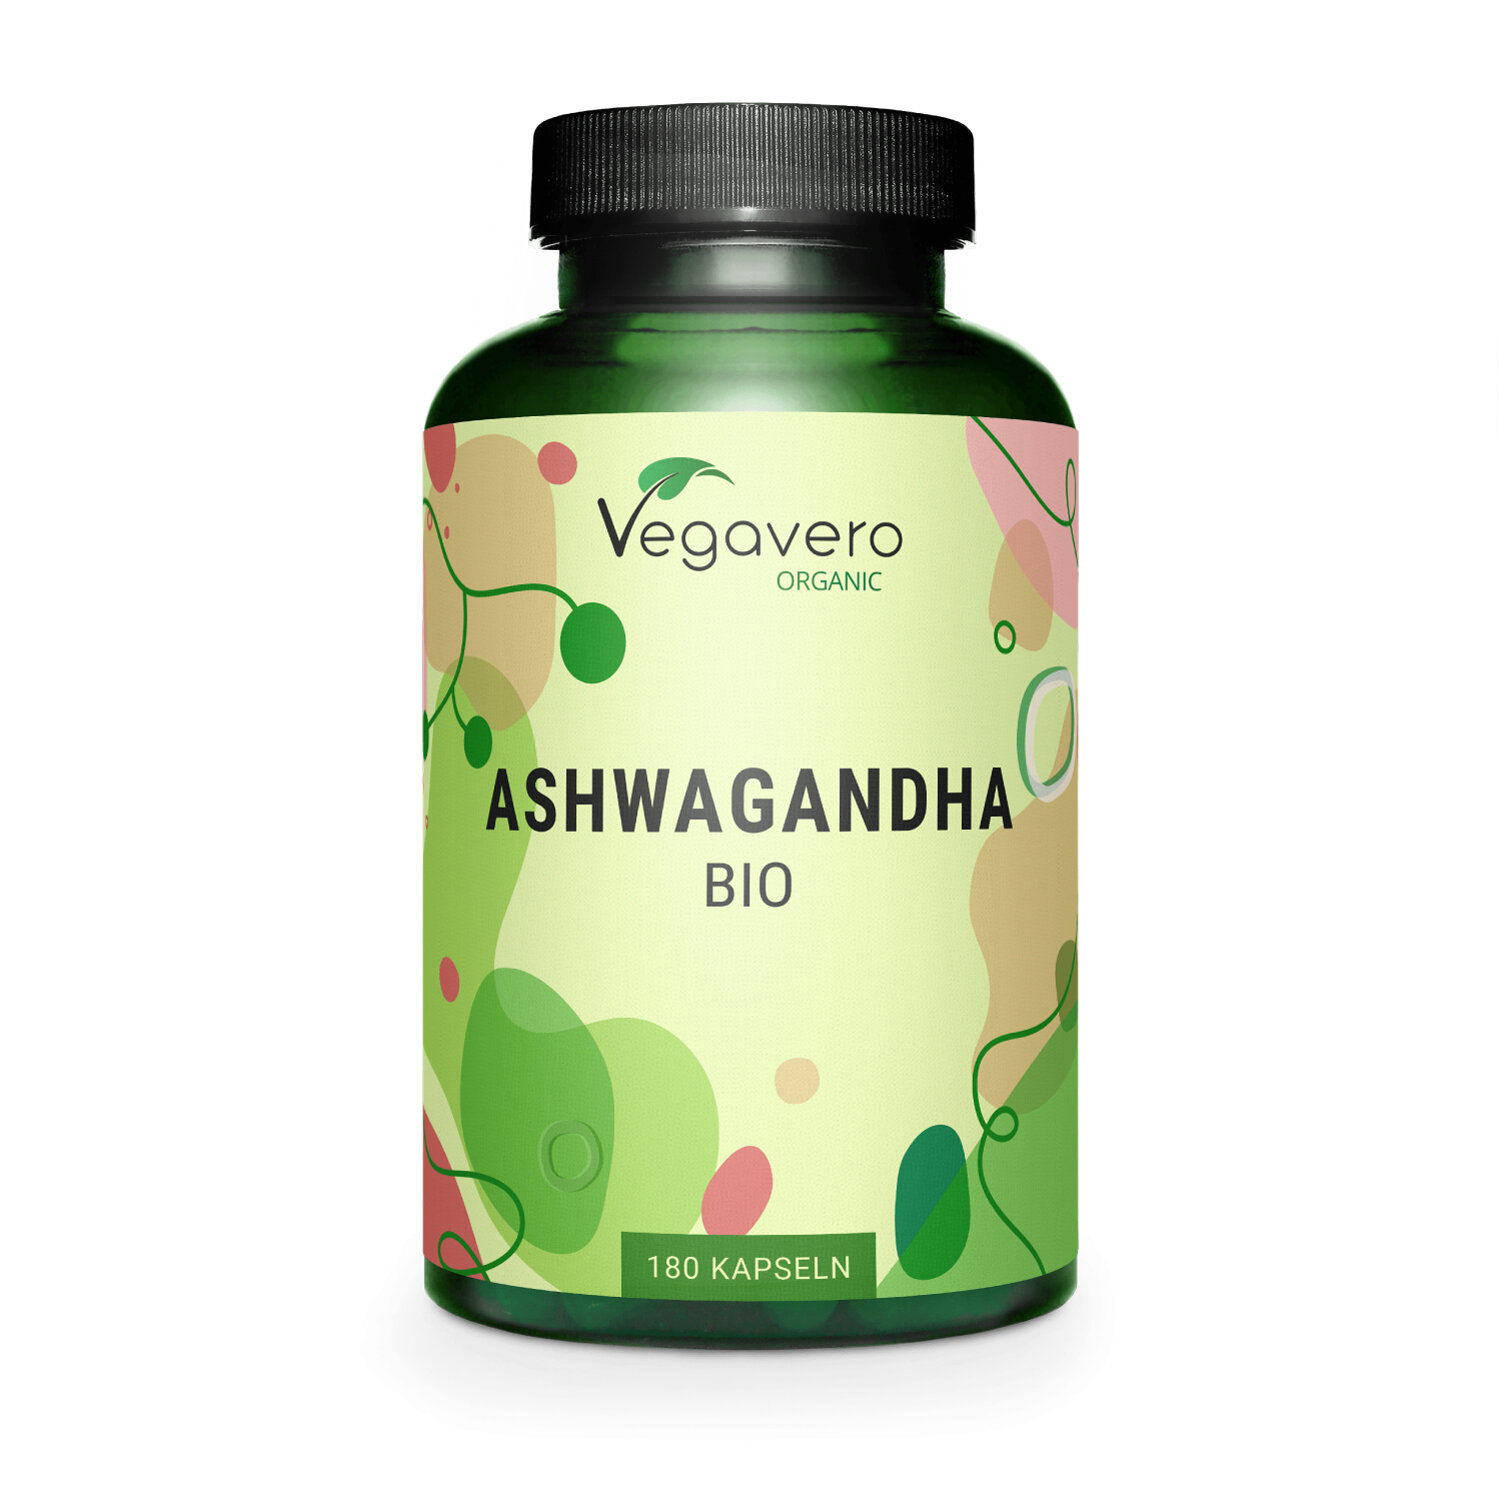 Vegavero Bio Ashwagandha | 180 Kapseln | 2% Withanolide | Stressbewältigung & Vitalität